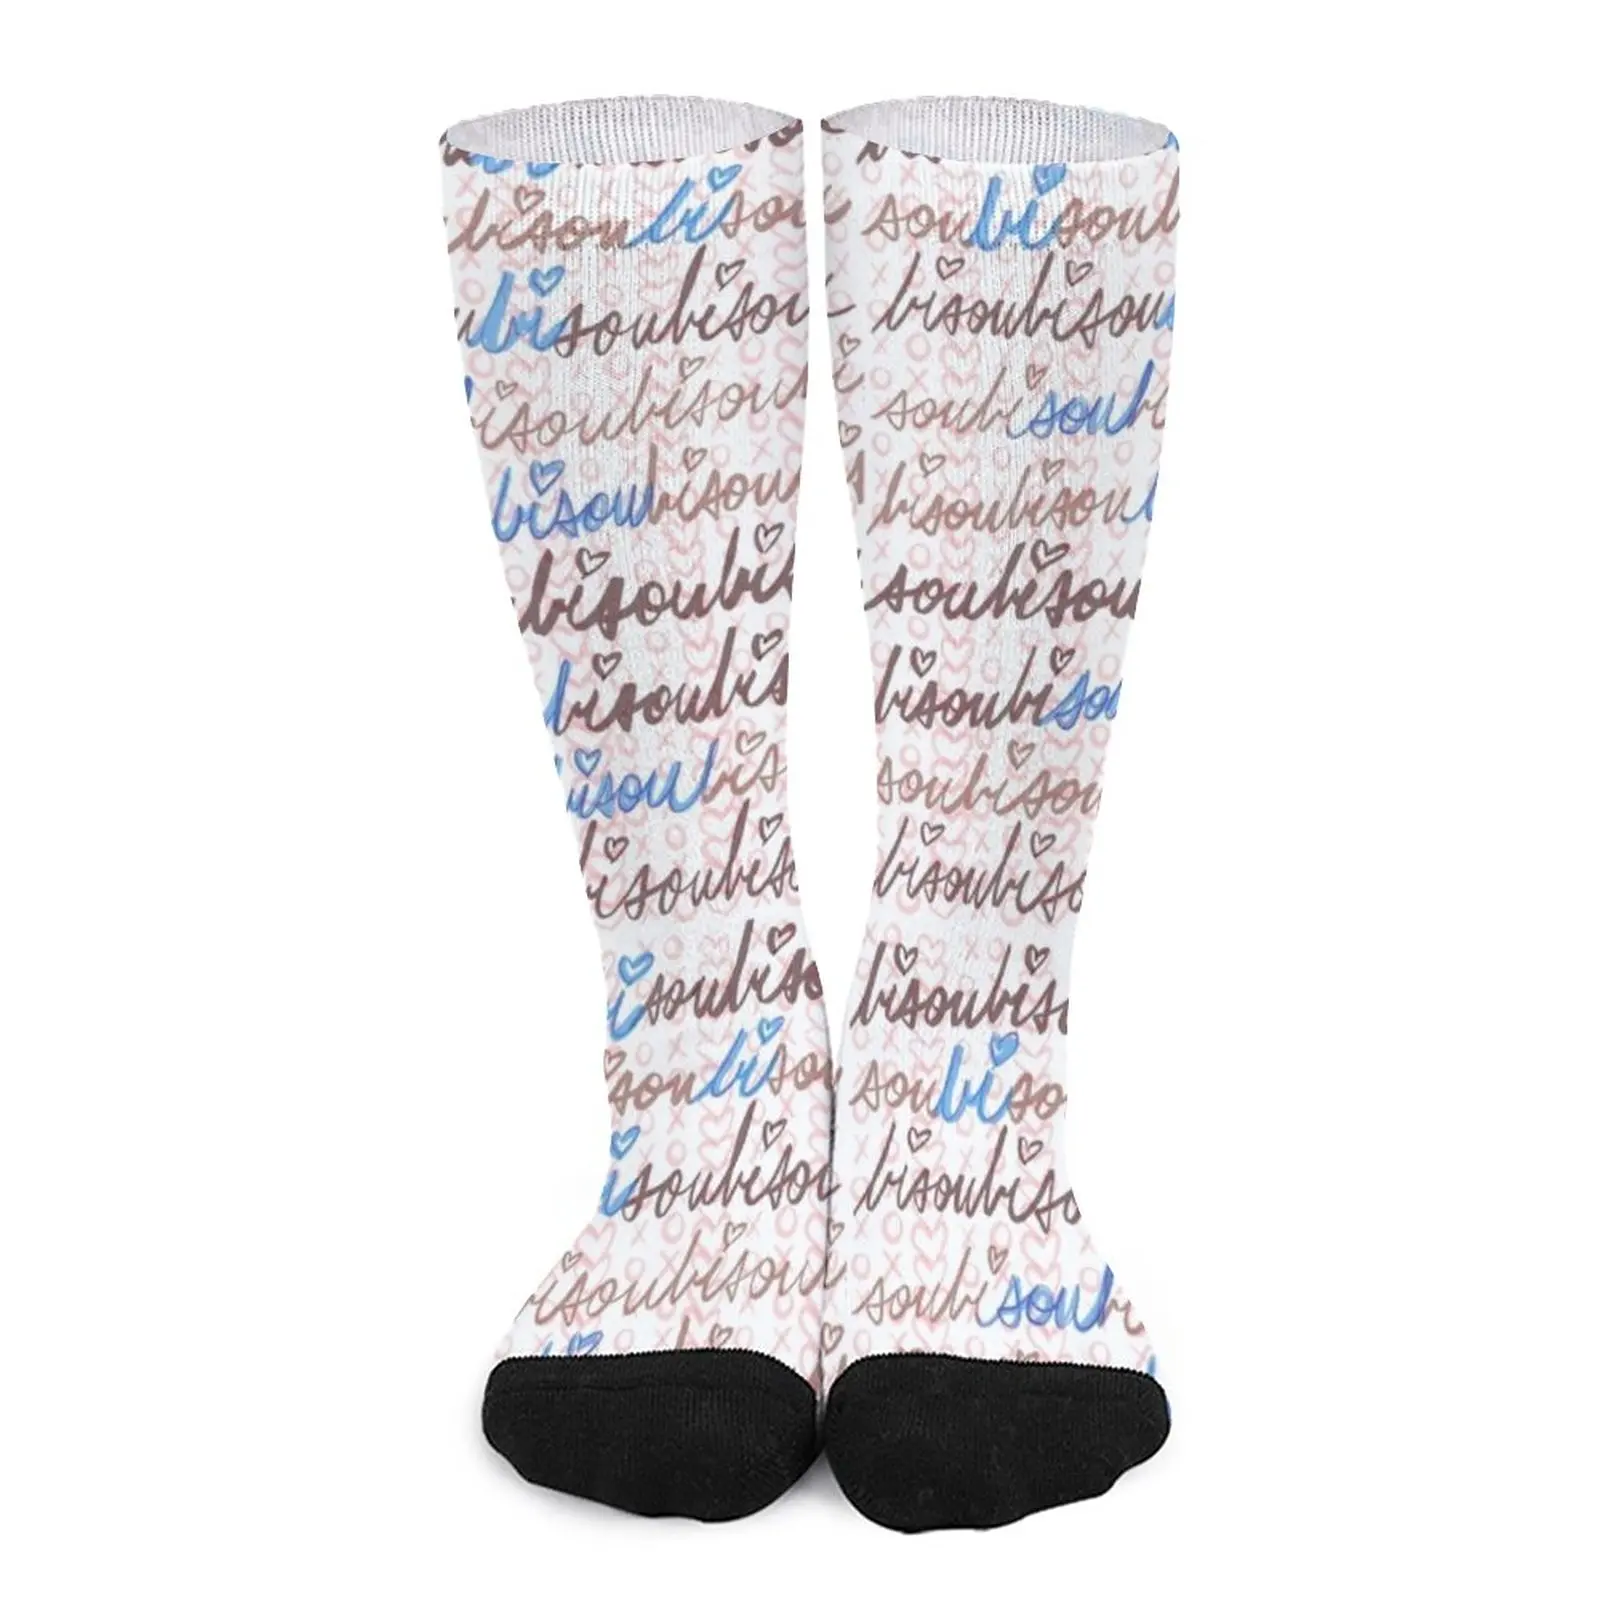 Bi Soul Bisou Blue and Brown Socks Stockings Argentina funny socks for Women